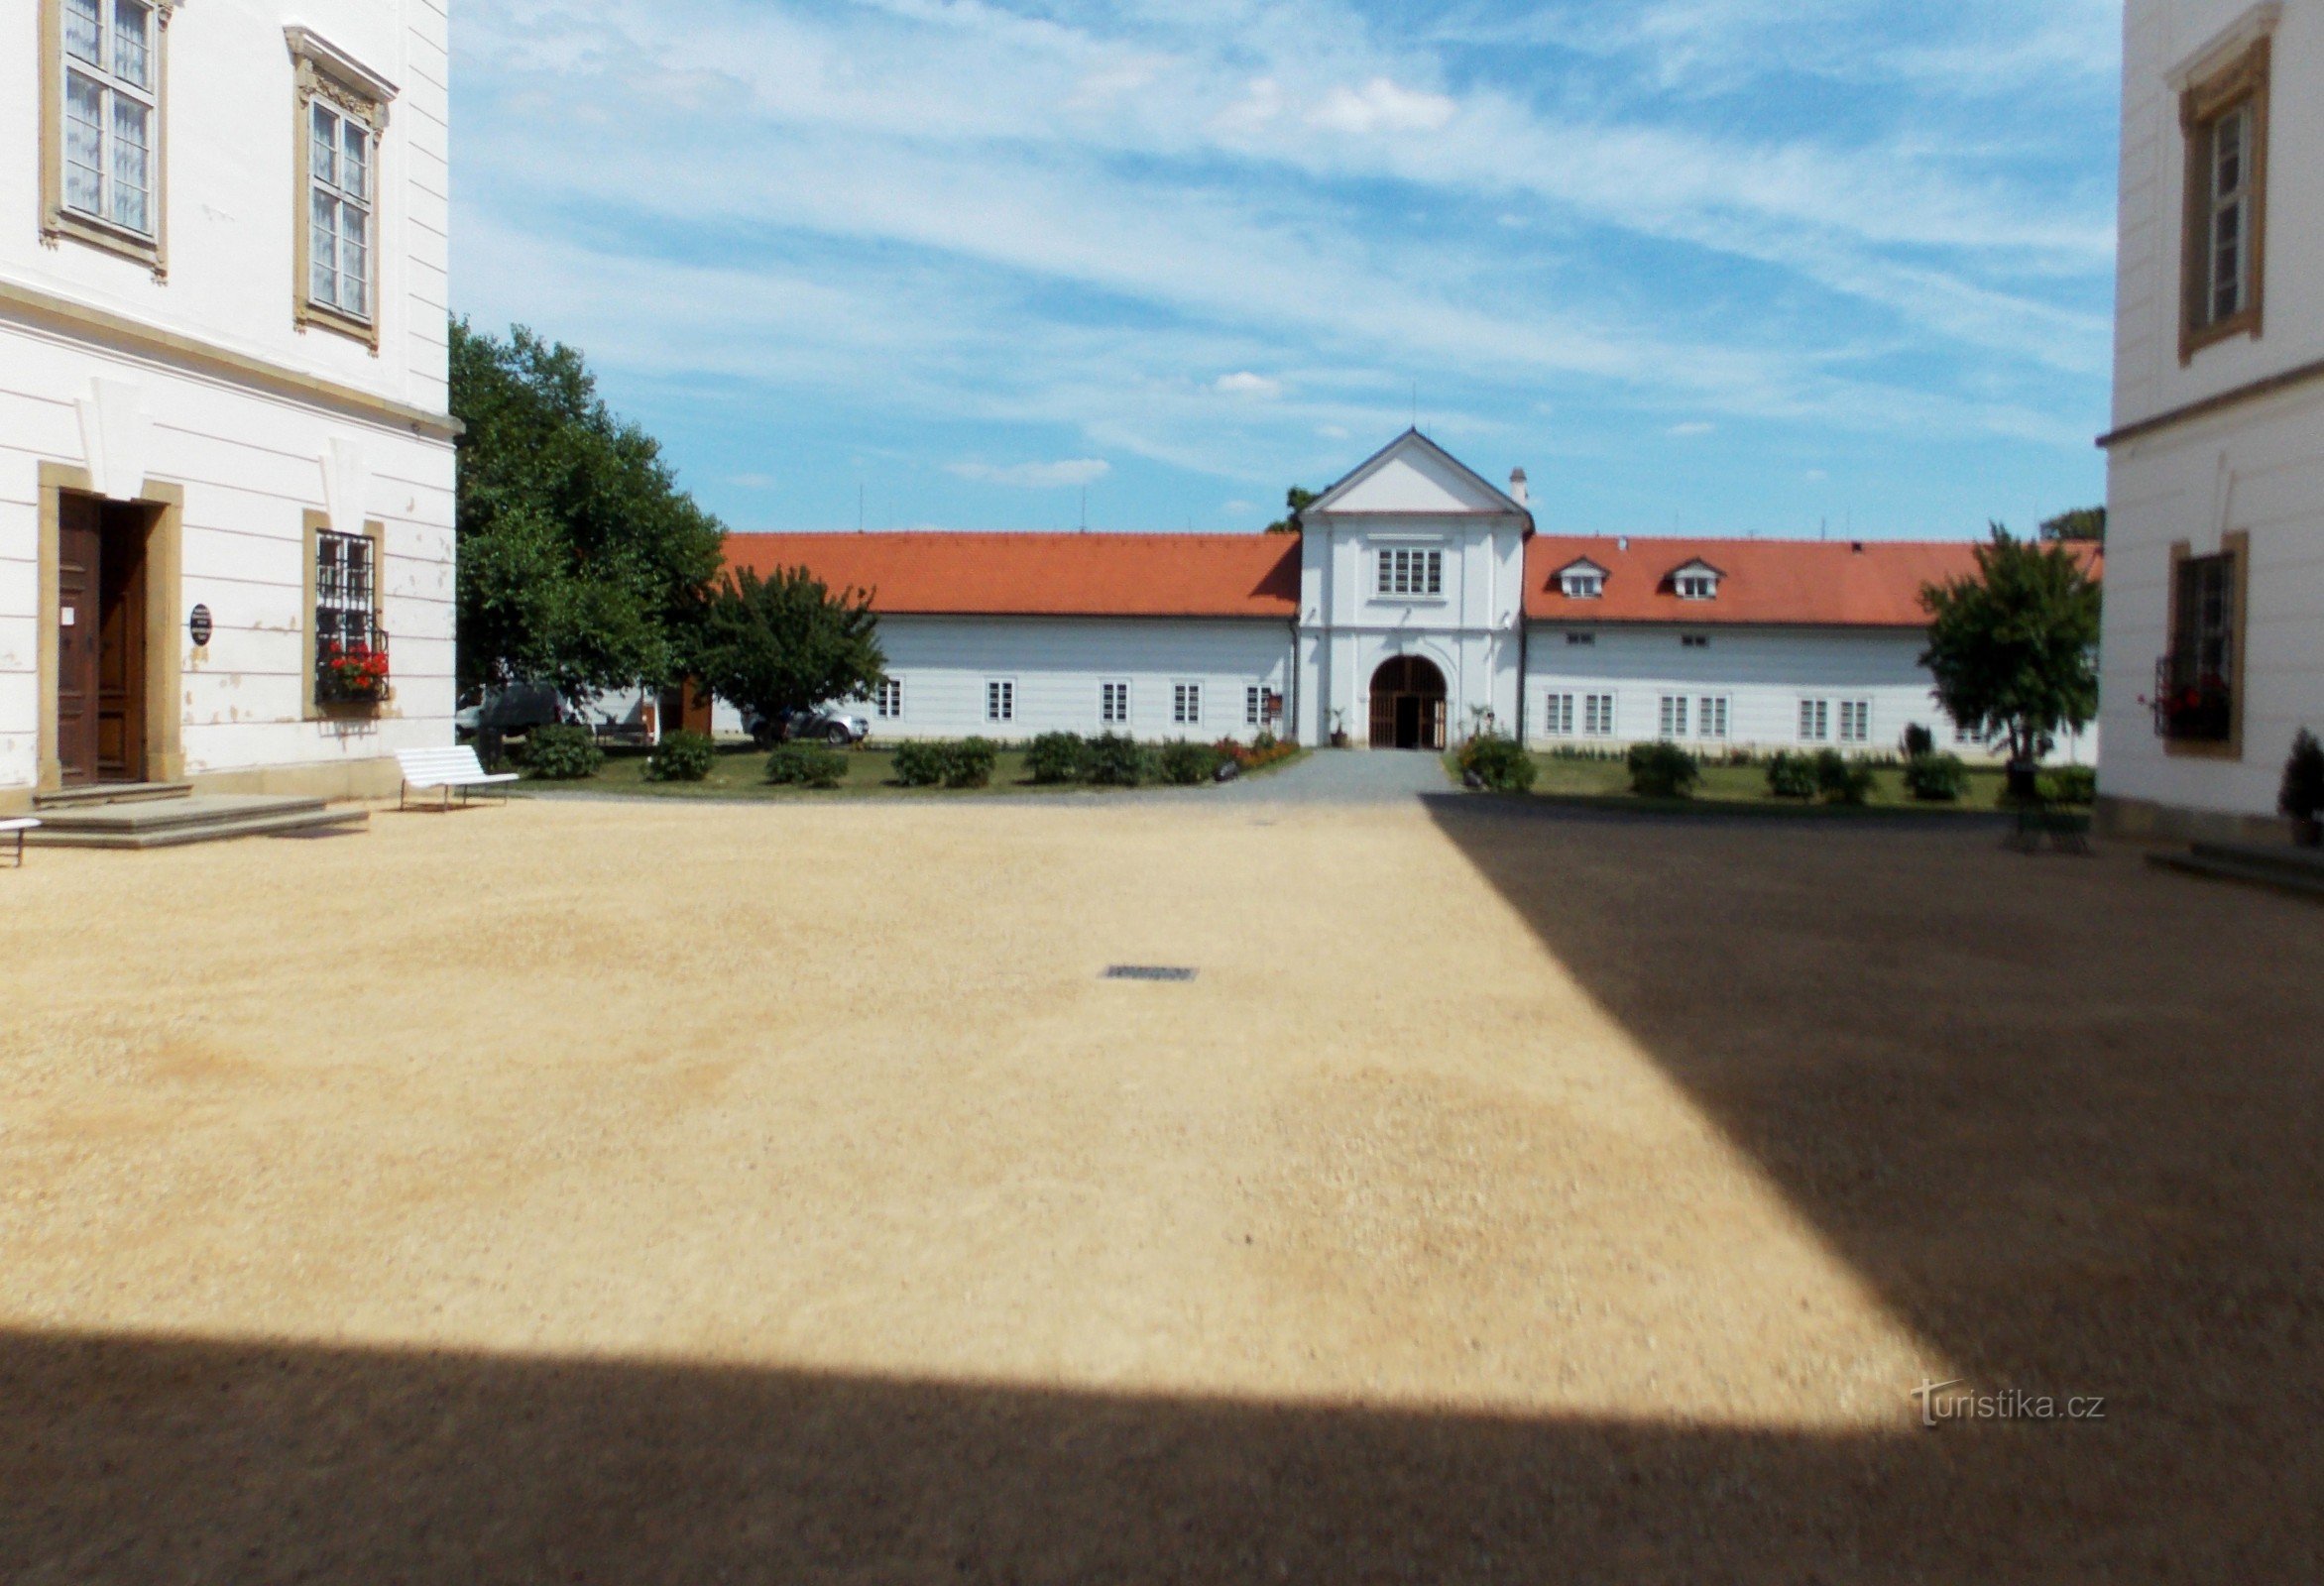 Letni spacer po zamku i ogrodzie w Vizovicích